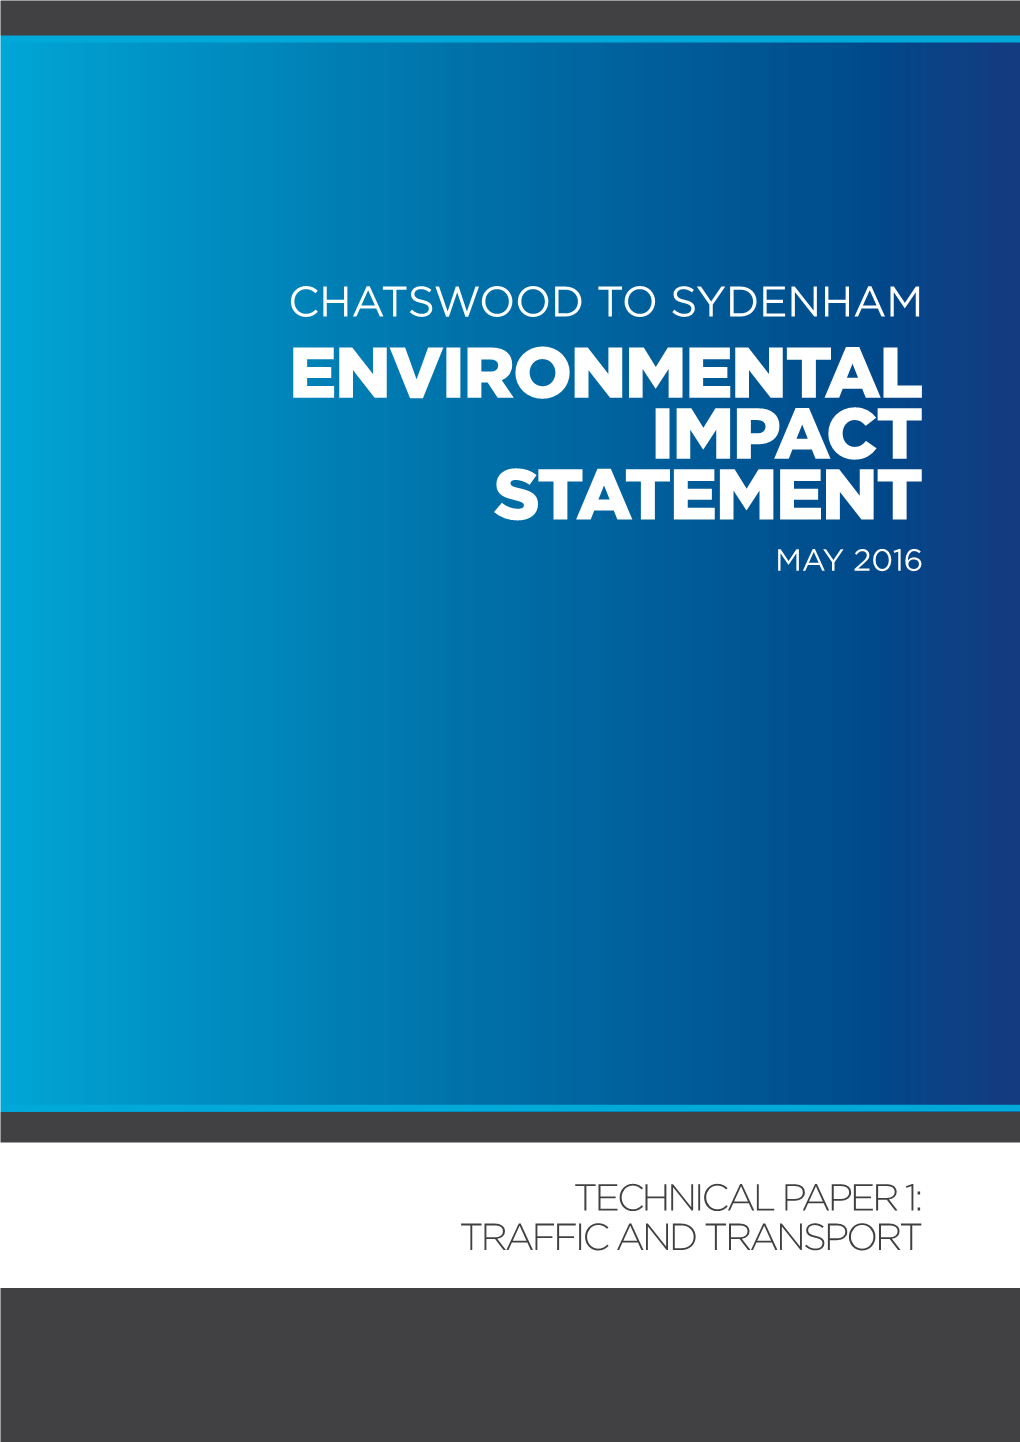 Chatswood to Sydenham Environmental Impact Statement May 2016